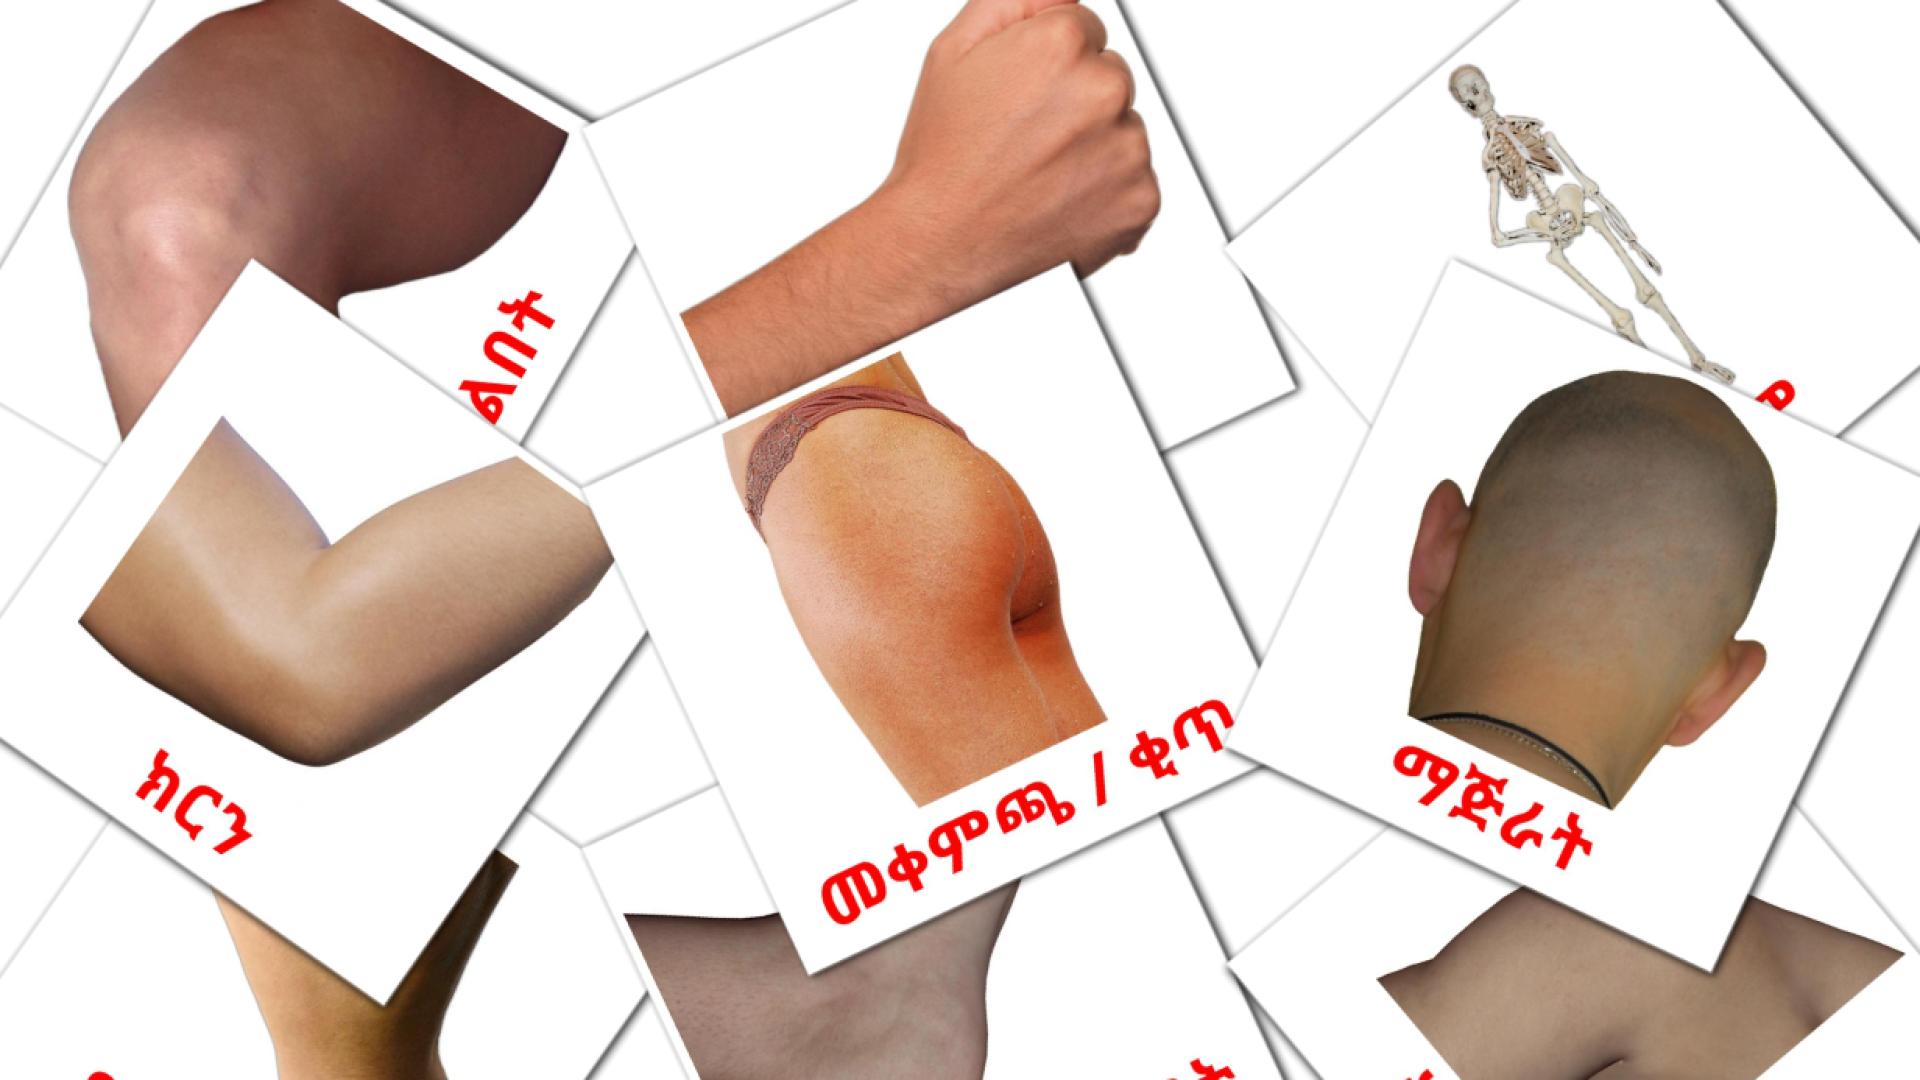 Body Parts - amharic vocabulary cards